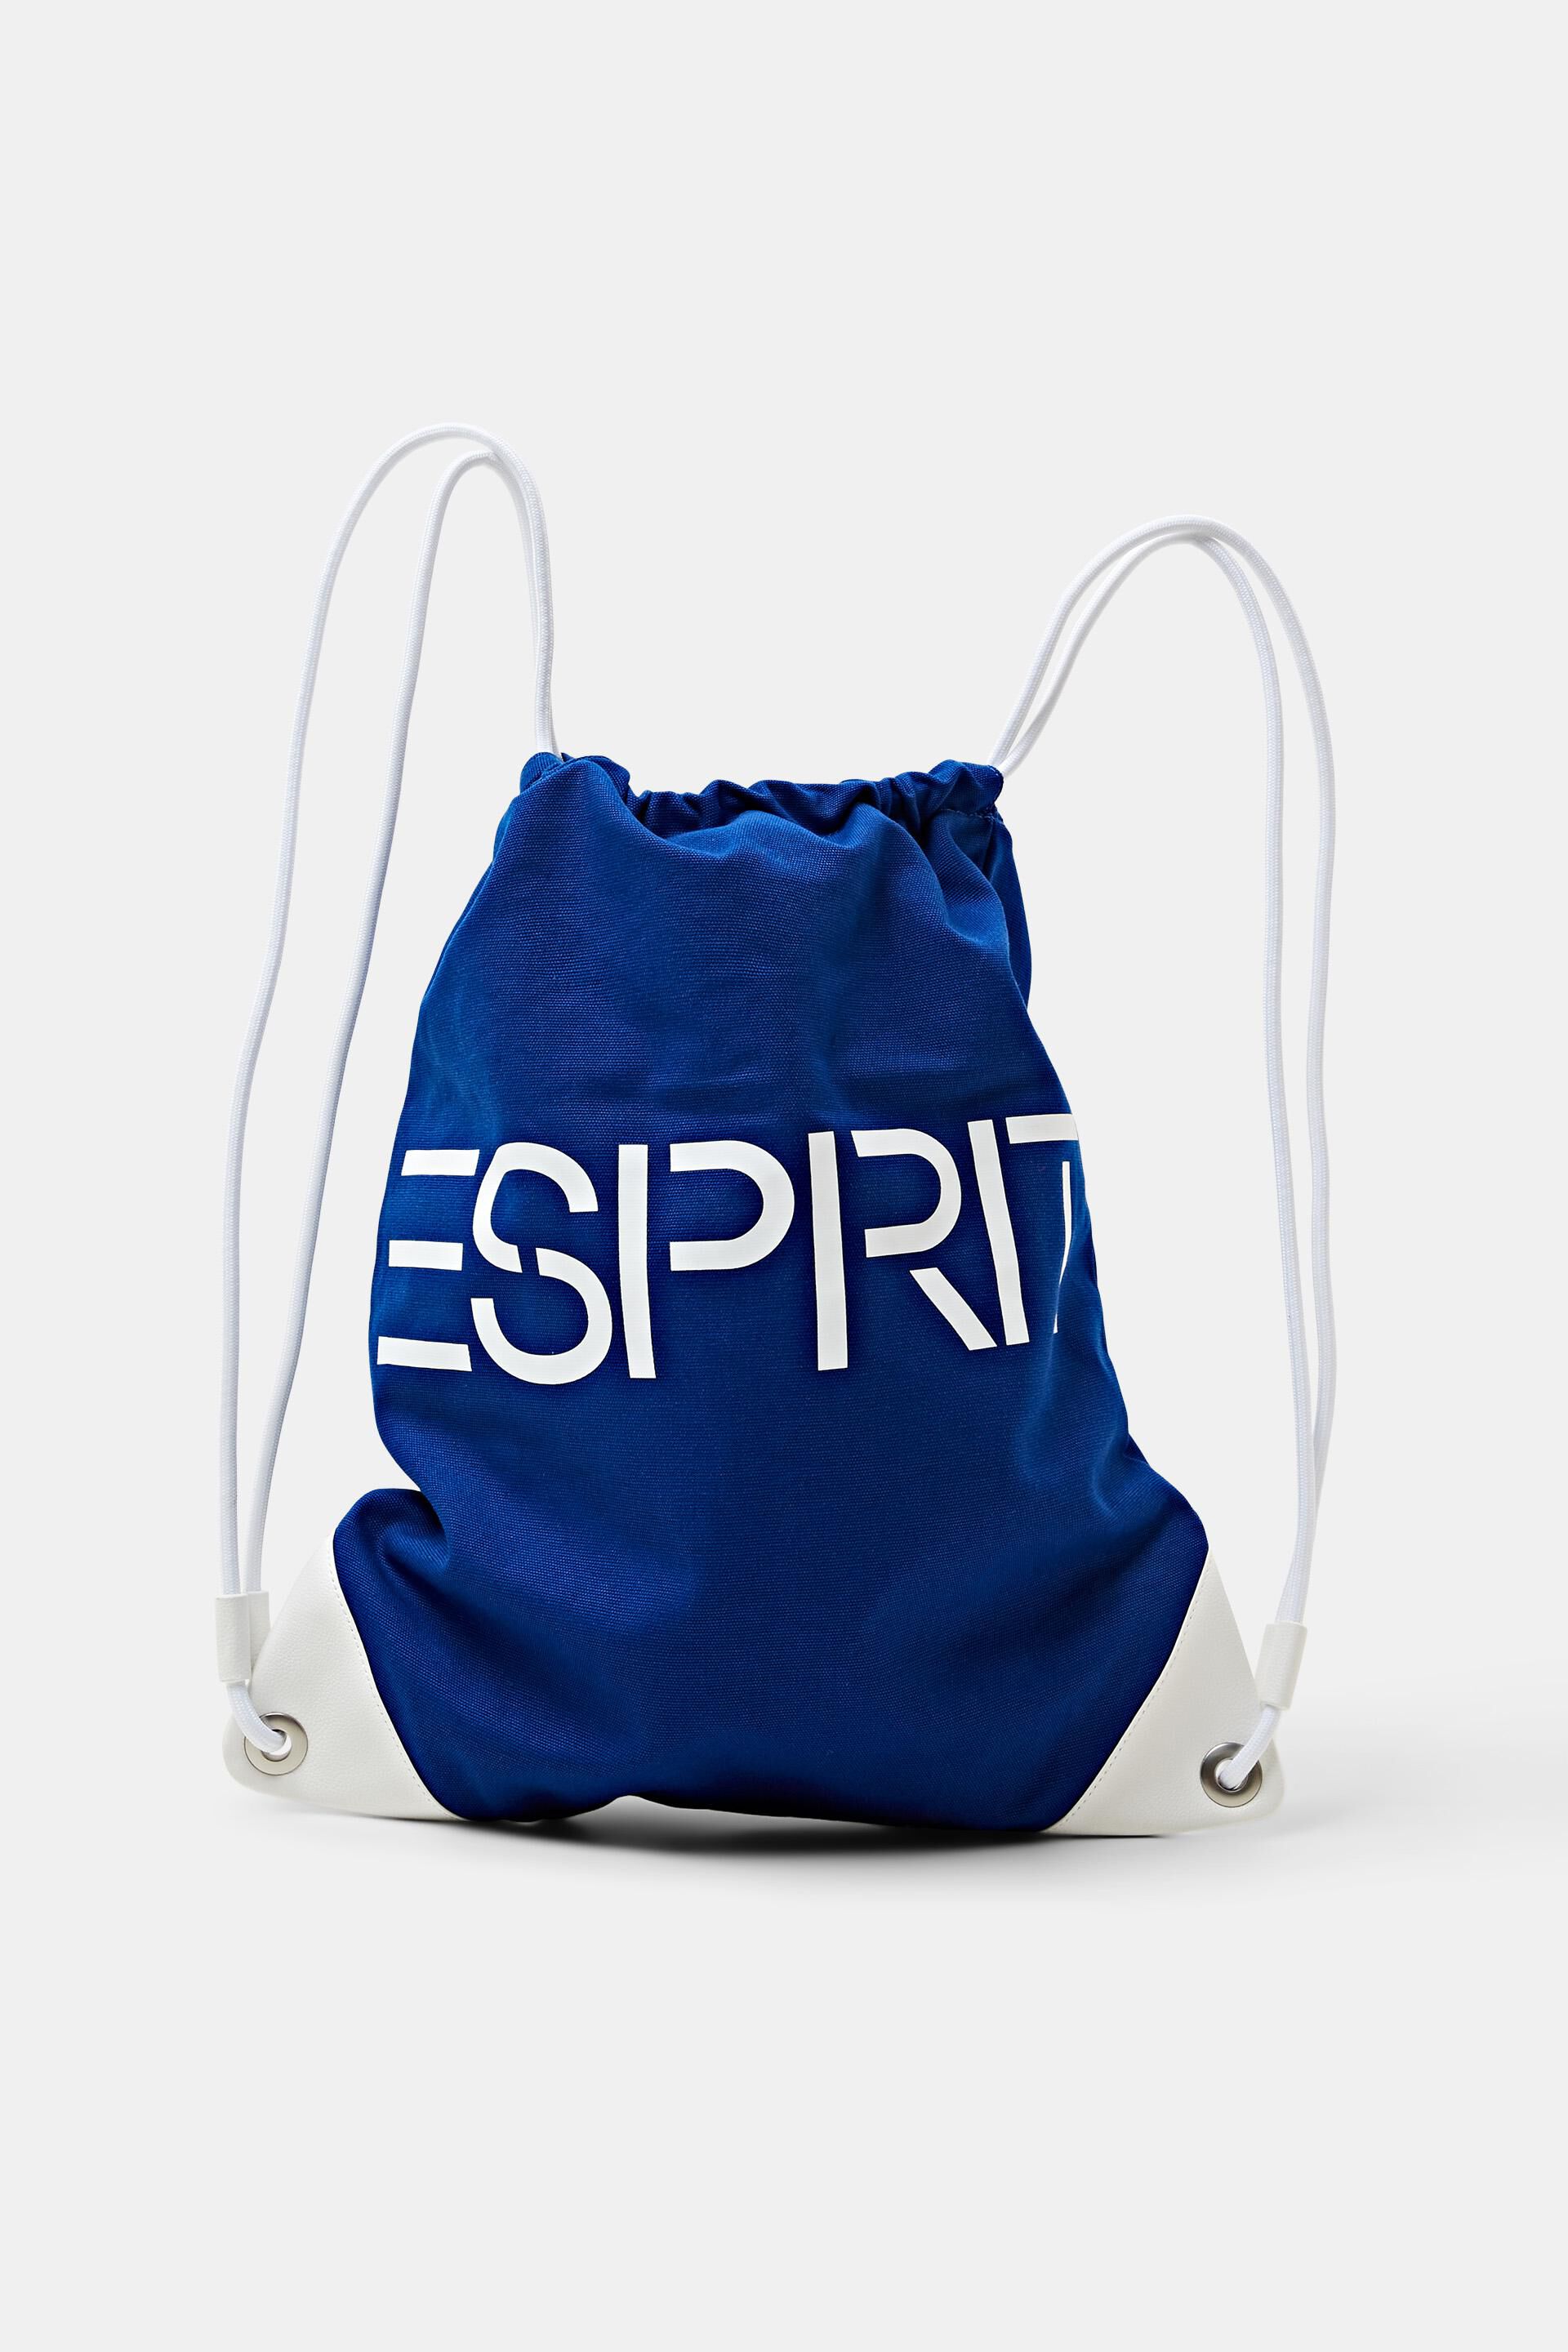 Esprit Mode Cotton Canvas Logo Drawstring Backpack